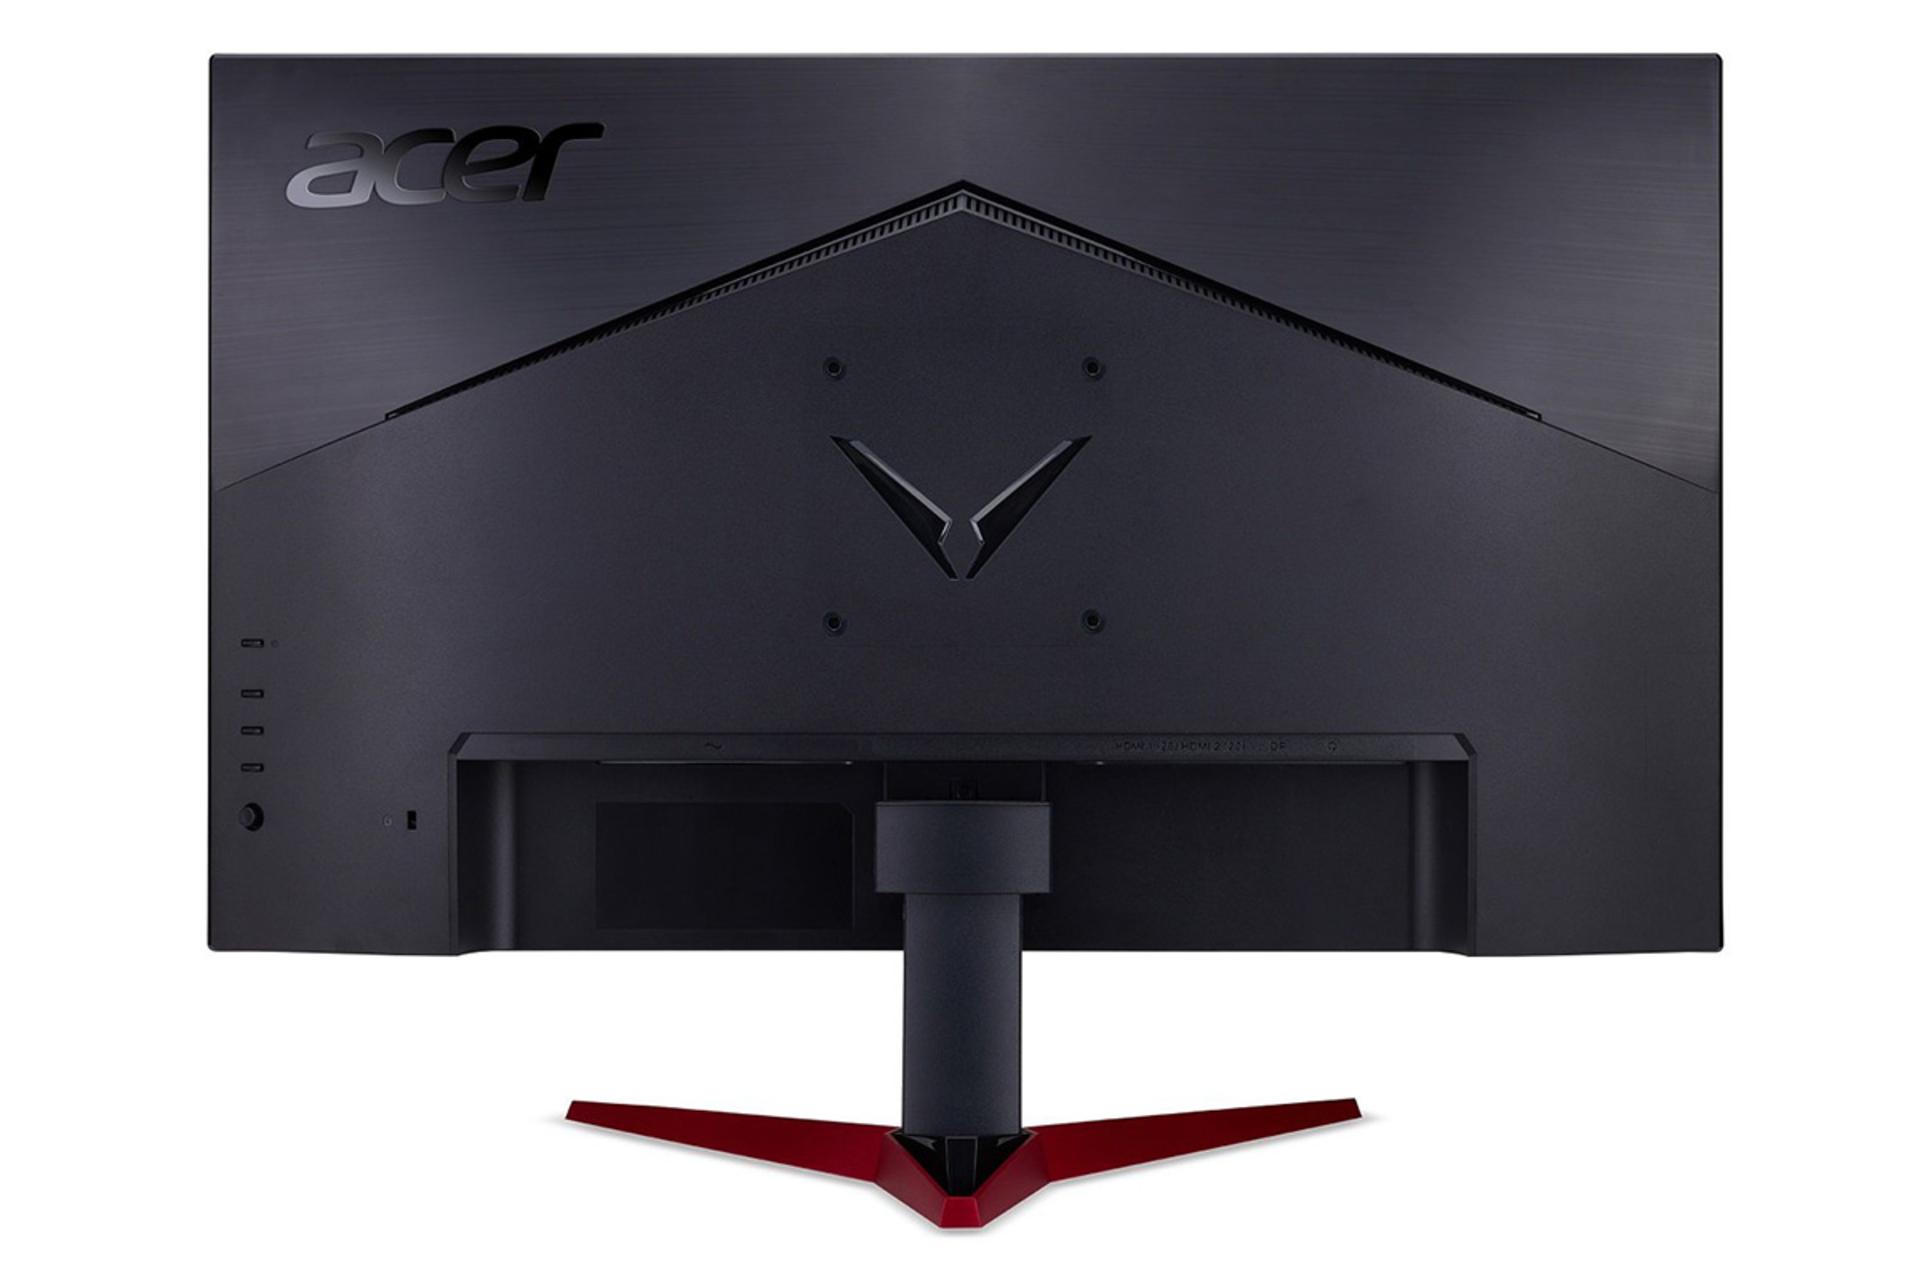 Acer Nitro VG270 S / ایسر نیترو